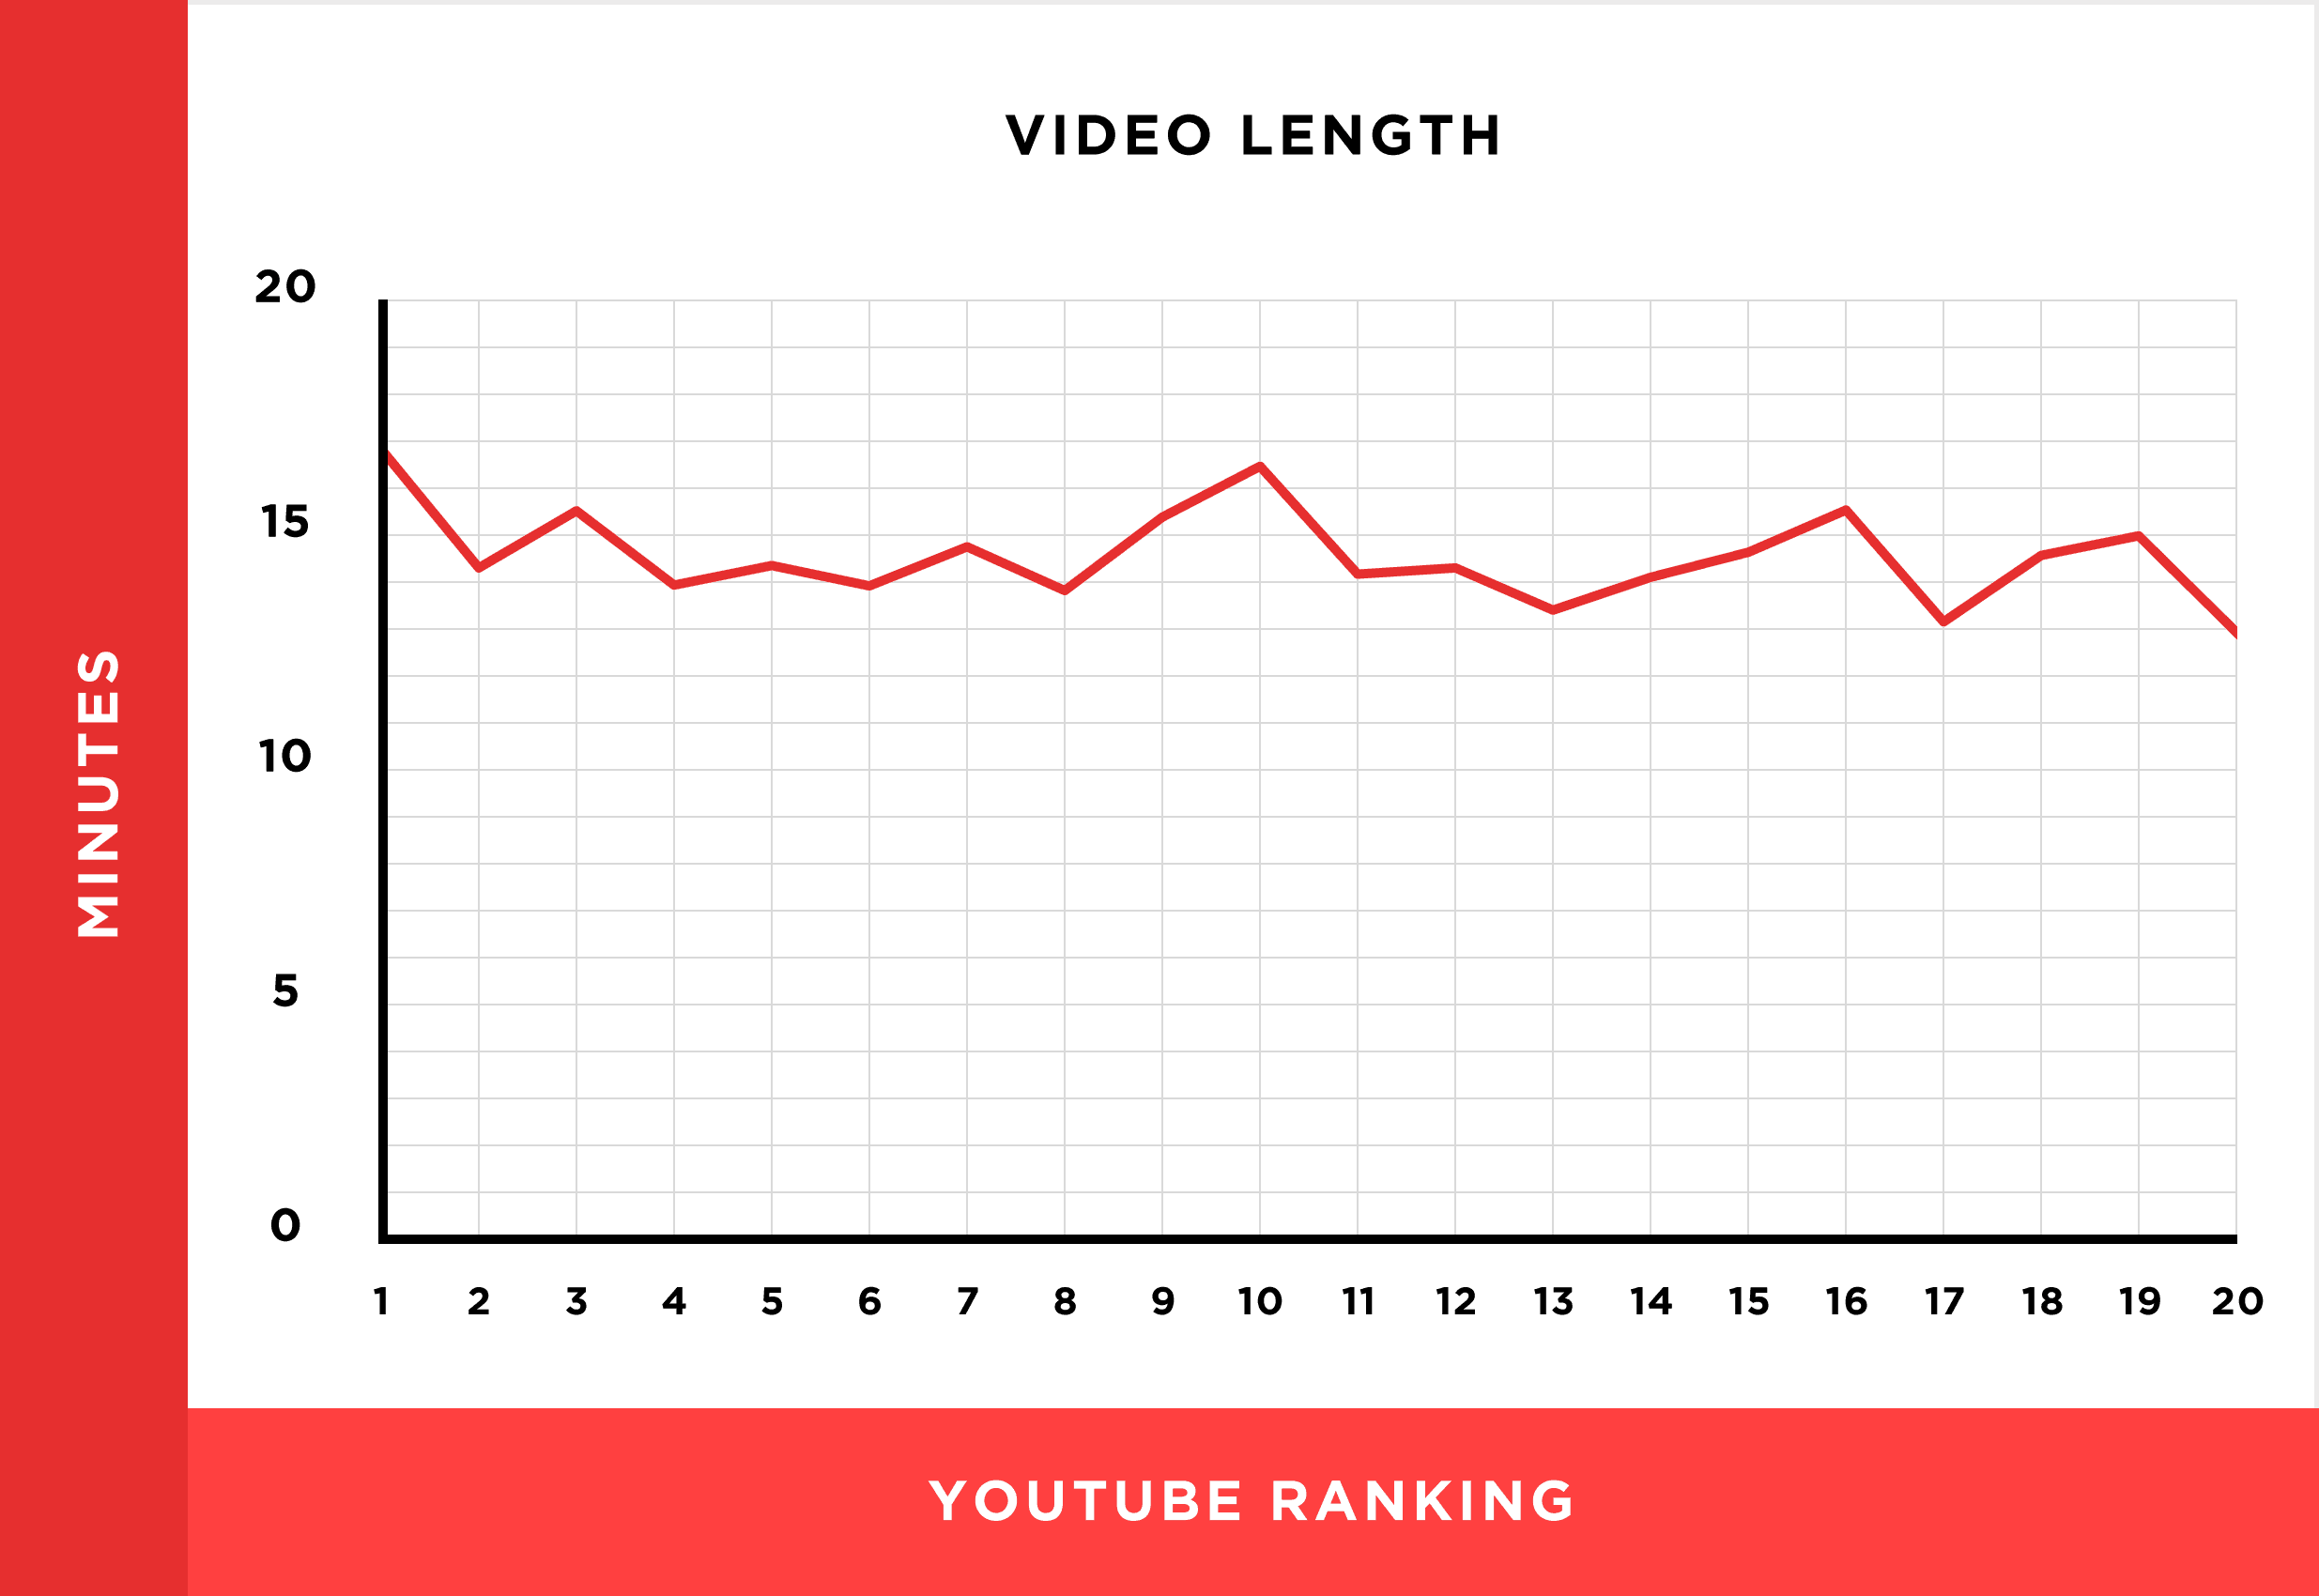 Longer videos tend to rank better in YouTube